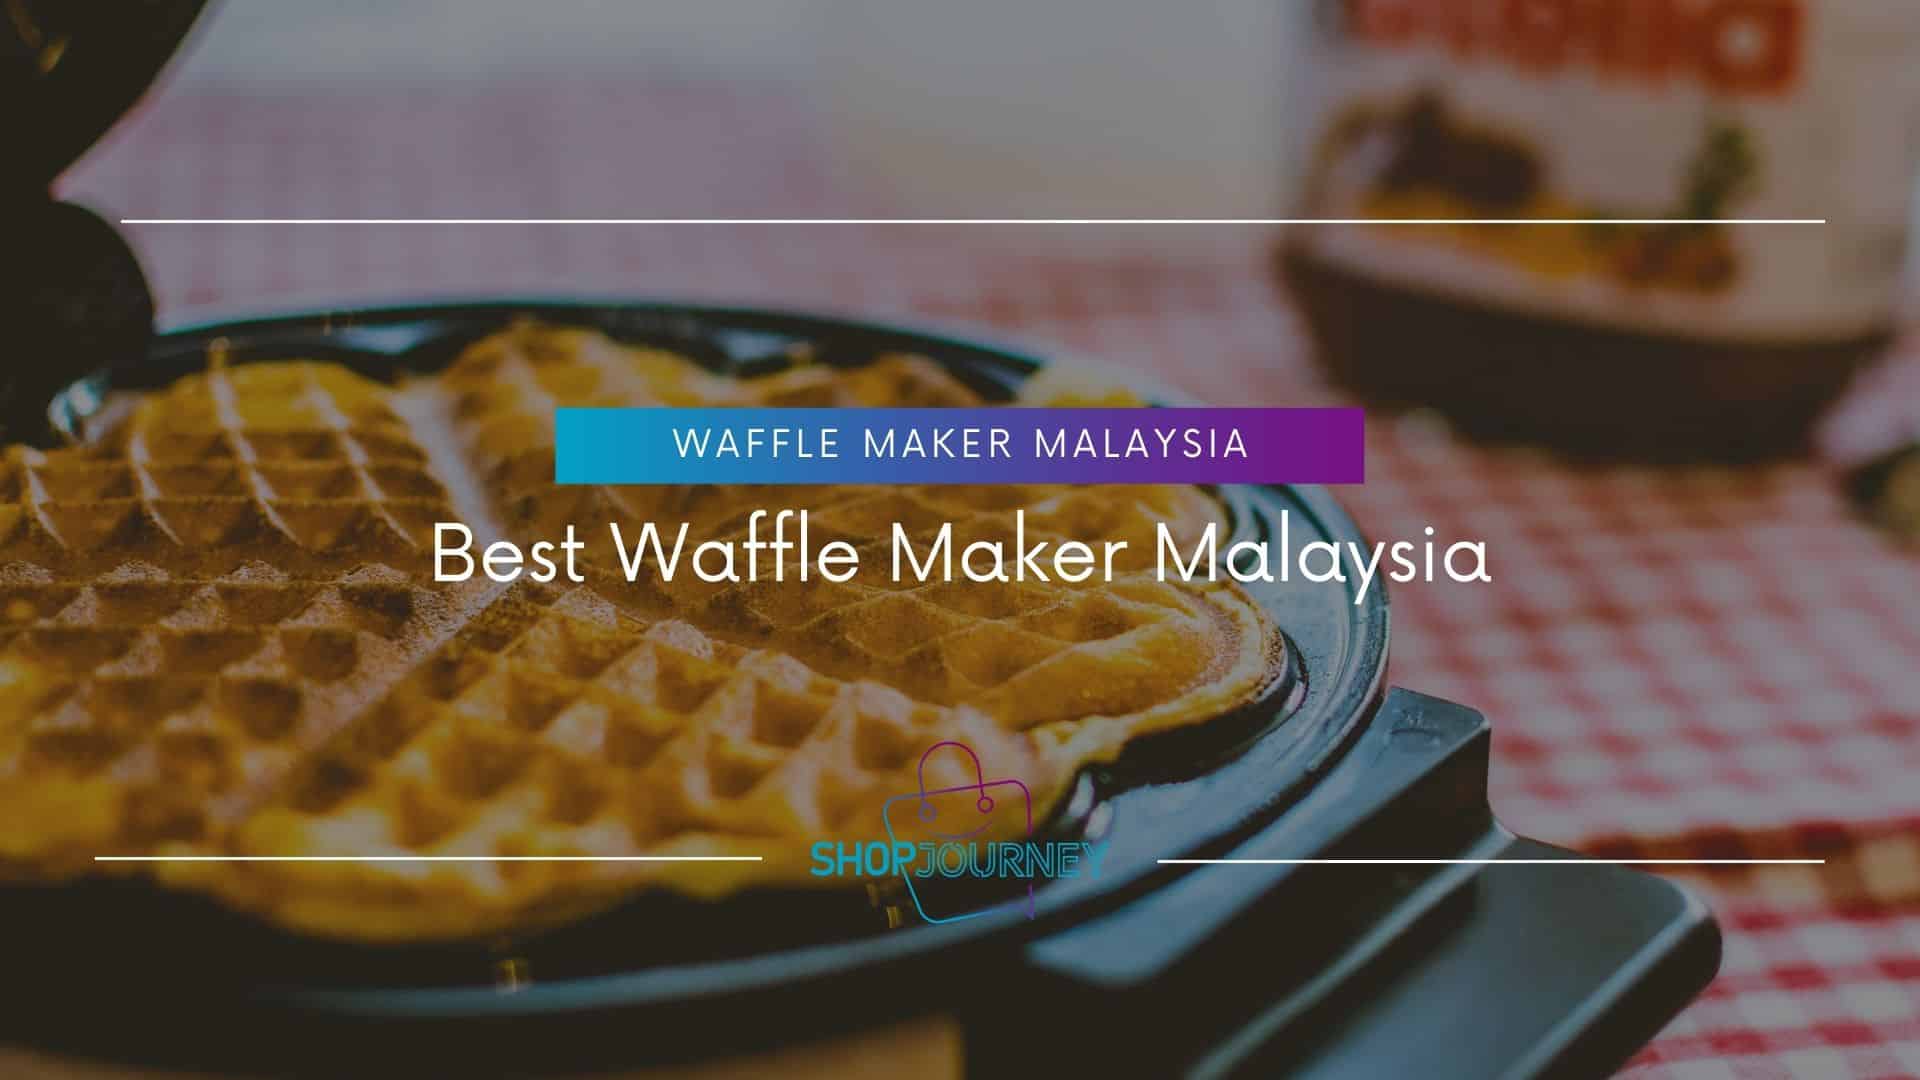 Best Waffle Maker Malaysia - Shop Journey